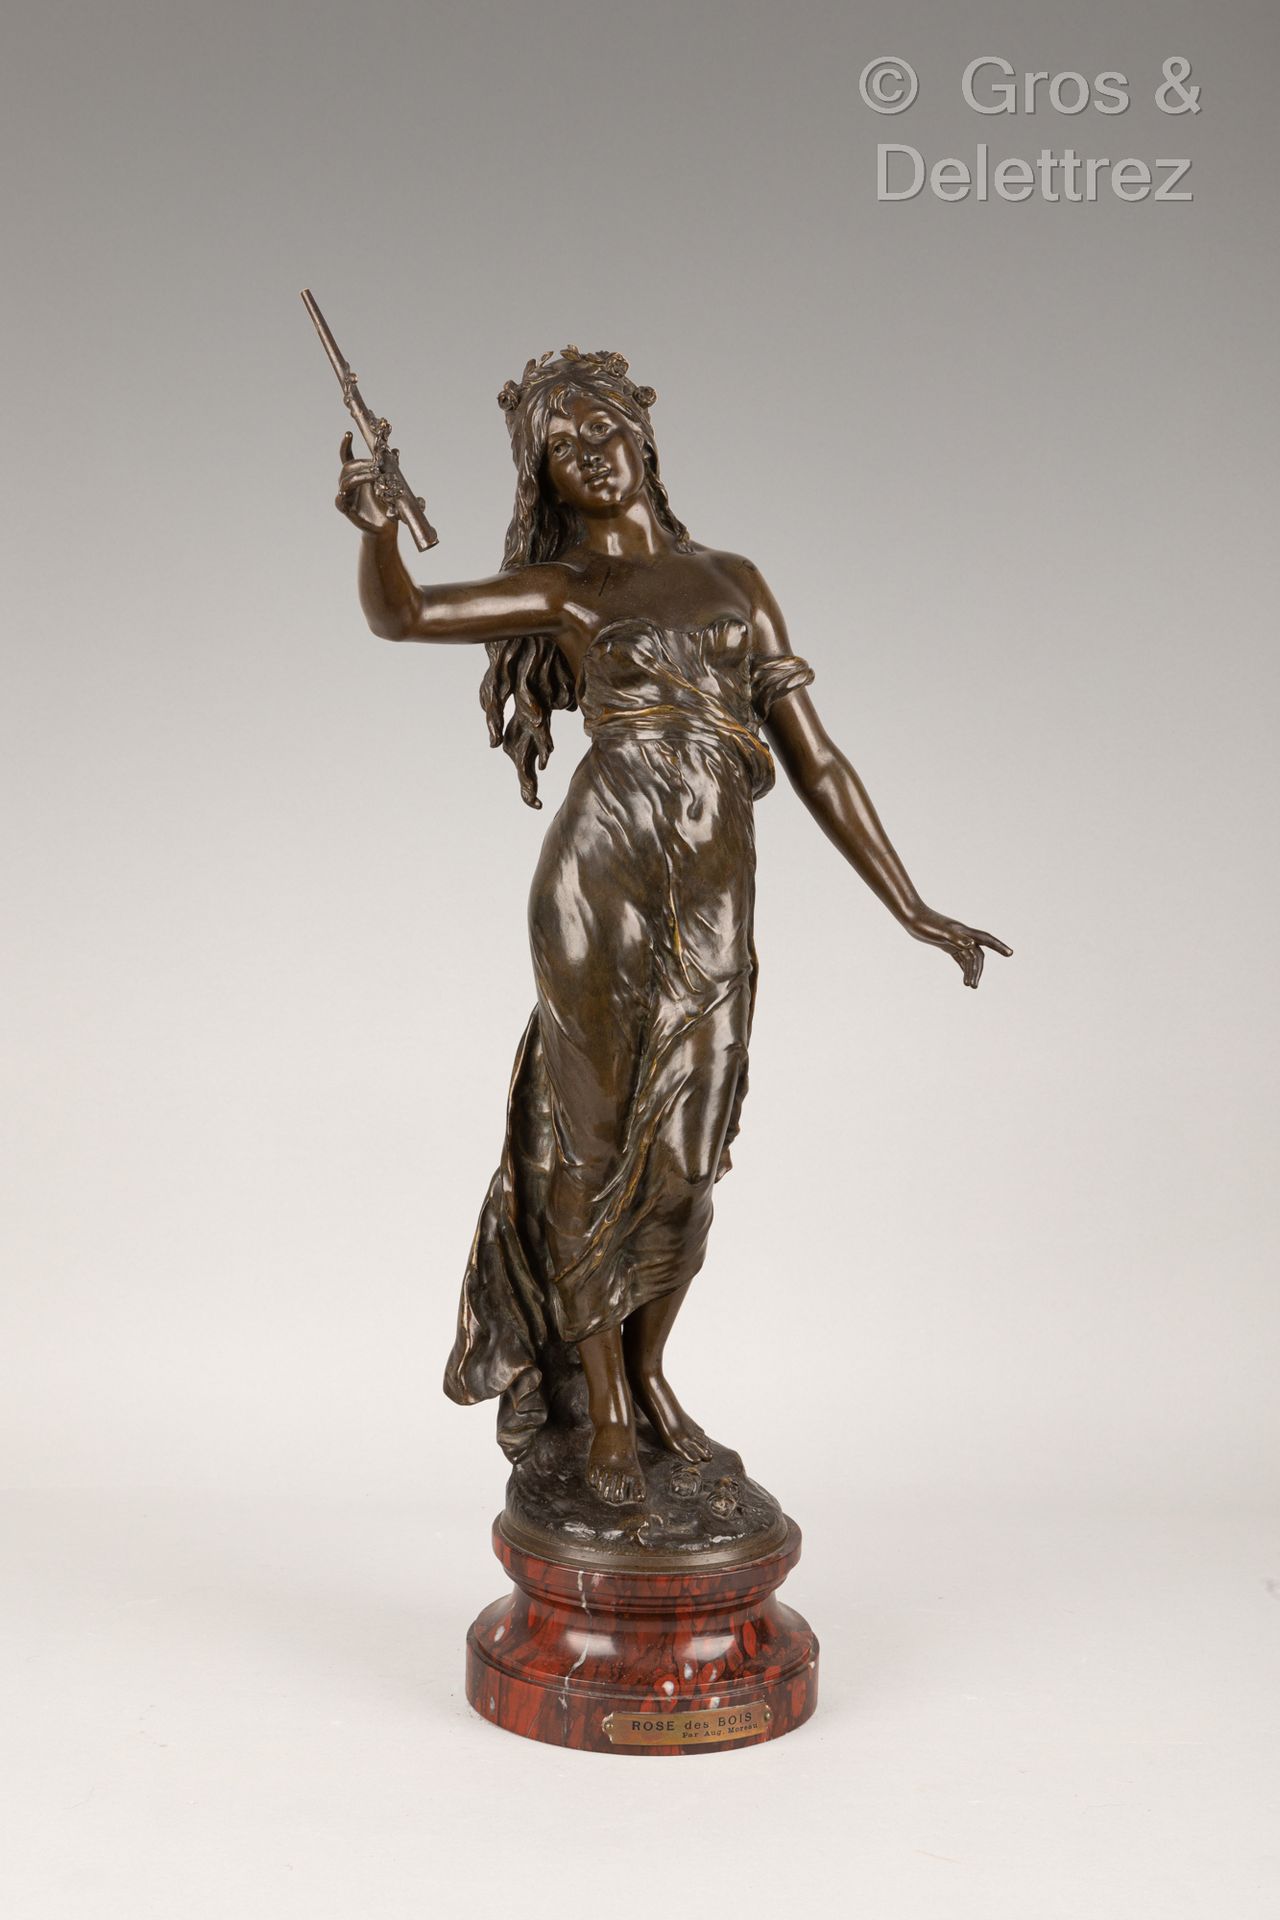 Null (E) Auguste MOREAU (1834-1917)

Rose des bois (Waldrose)

Skulptur aus pati&hellip;